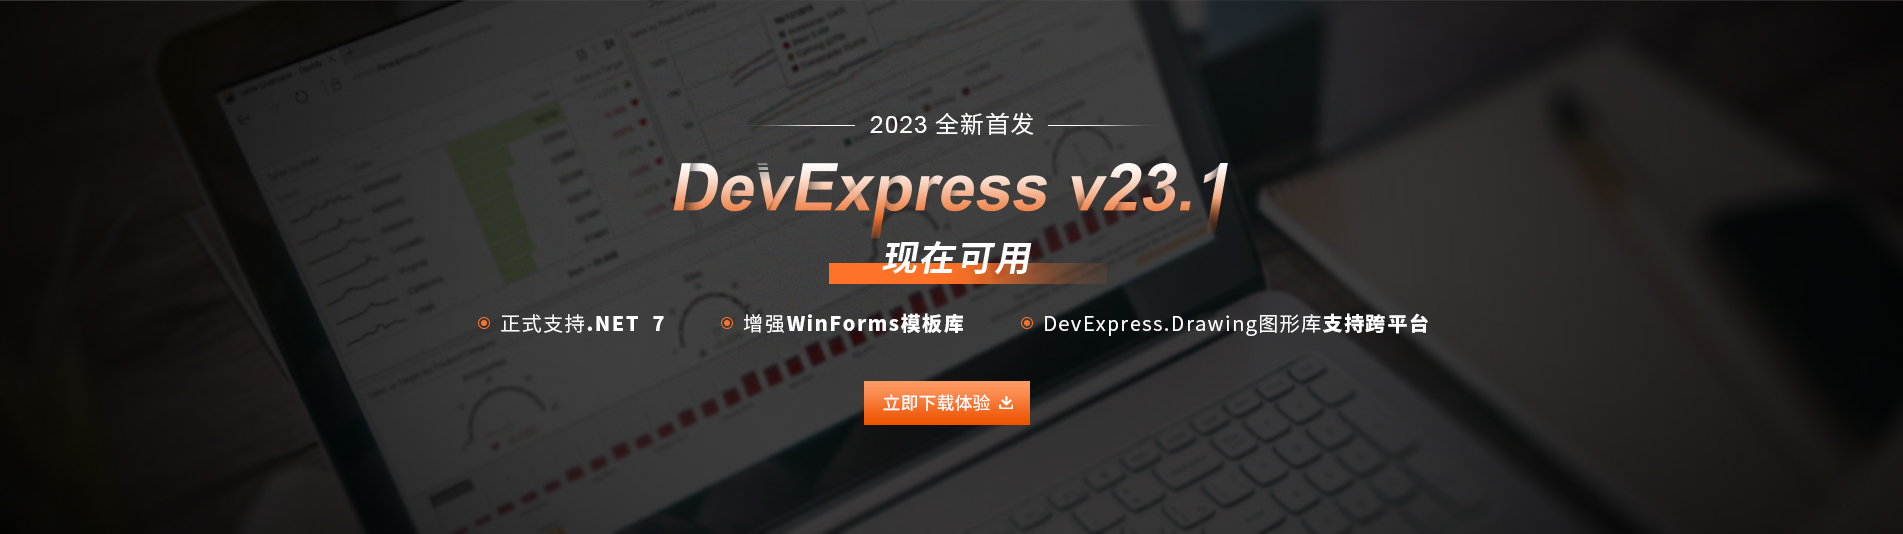 DevExpress v23.1全新发布